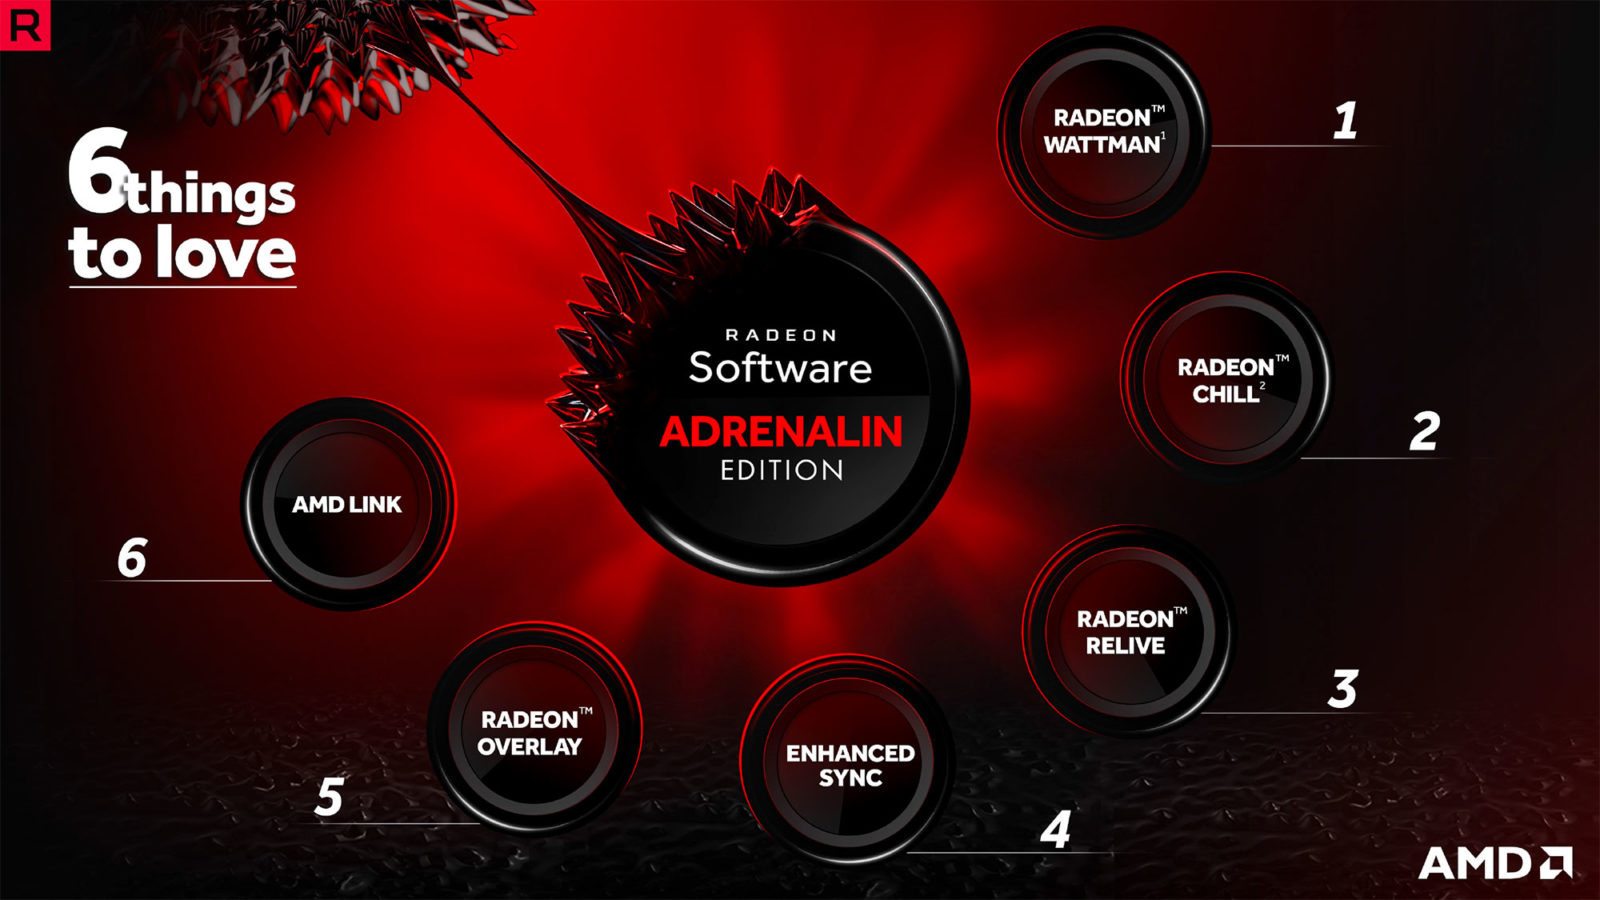 AMD Radeon Adrenalin Edition 17.12.1 WHQL